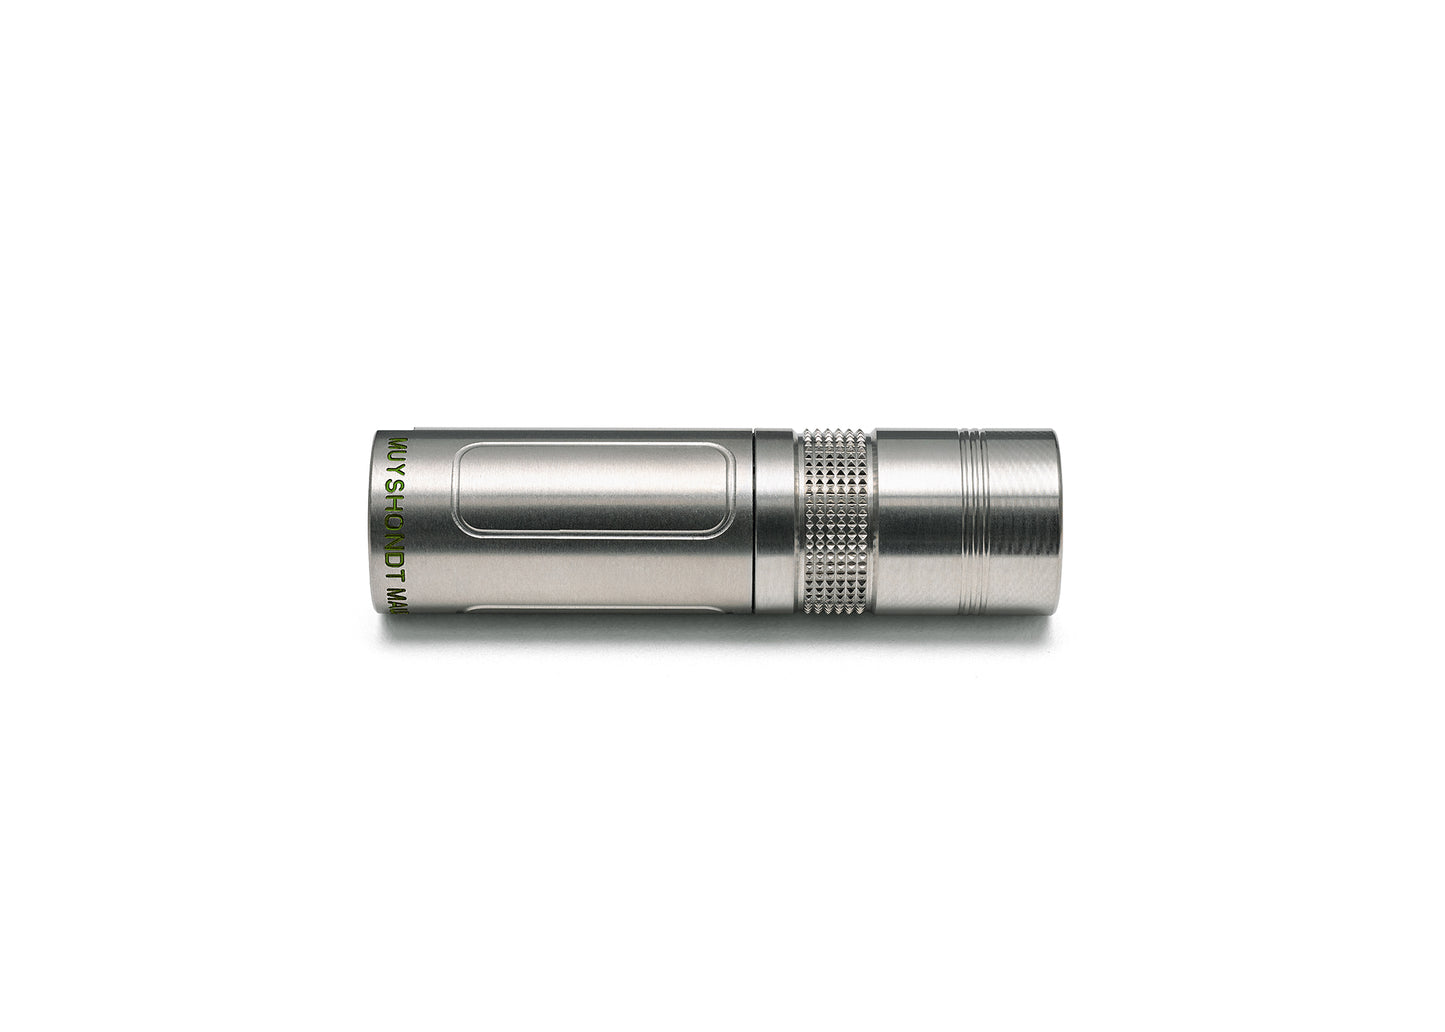 Maus UV Electric Torch - Titanium Analog:Shift Exclusive Edition by Muyshondt